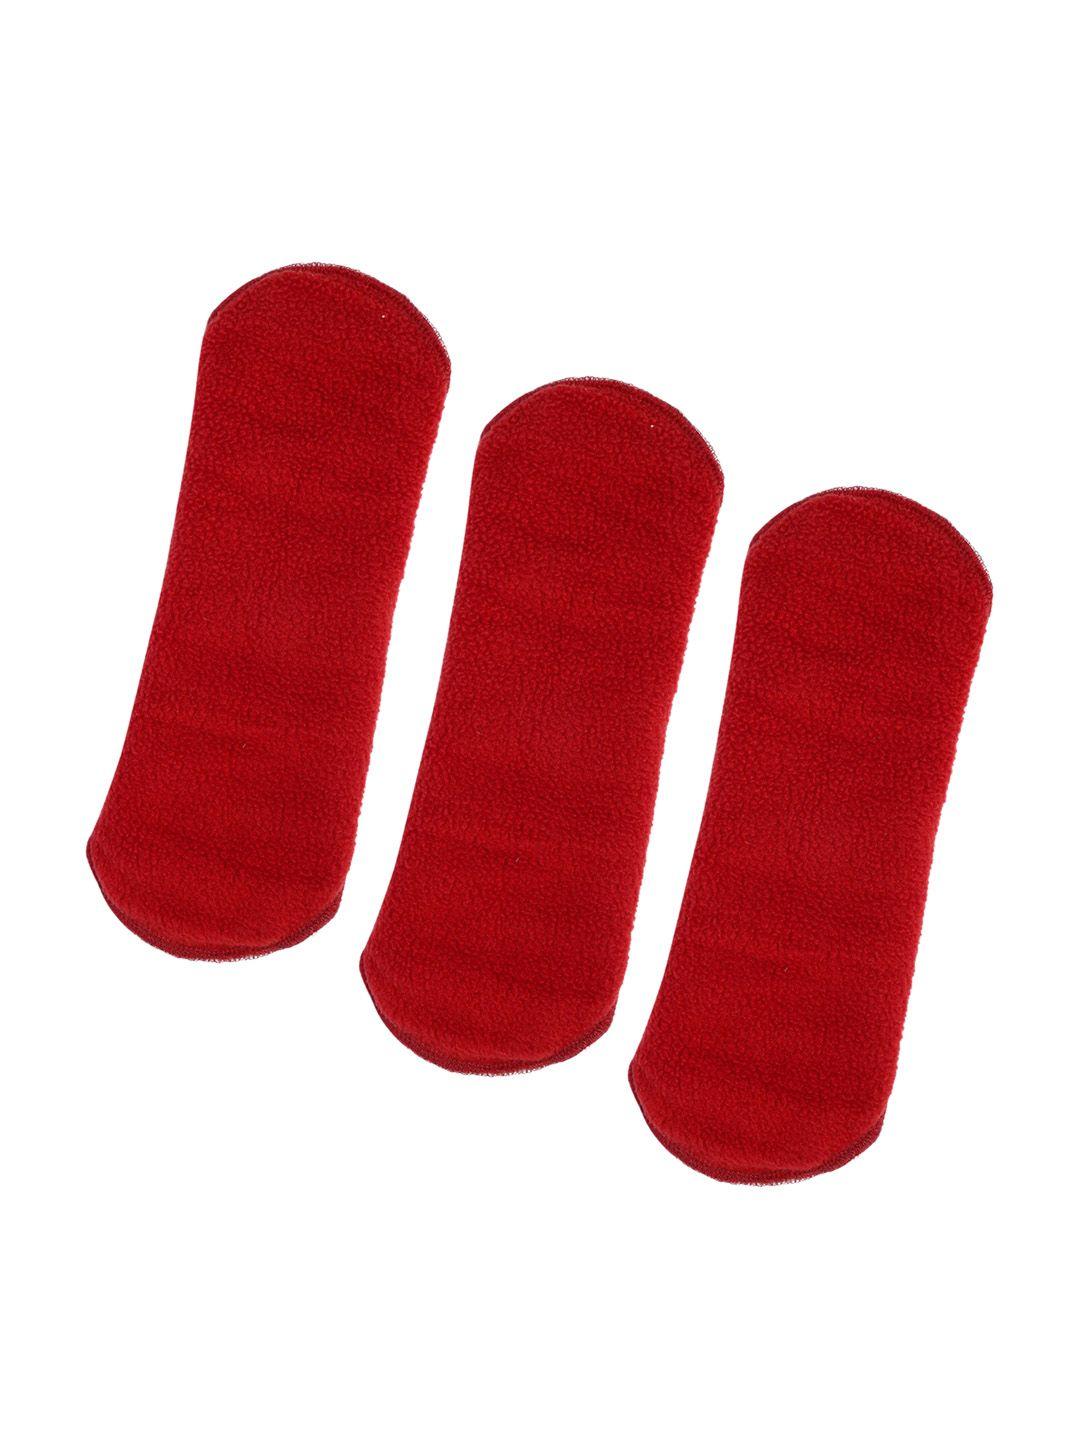 caredone-set-of-3-reusable-&-washable-cotton-sanitary-cloth-pads